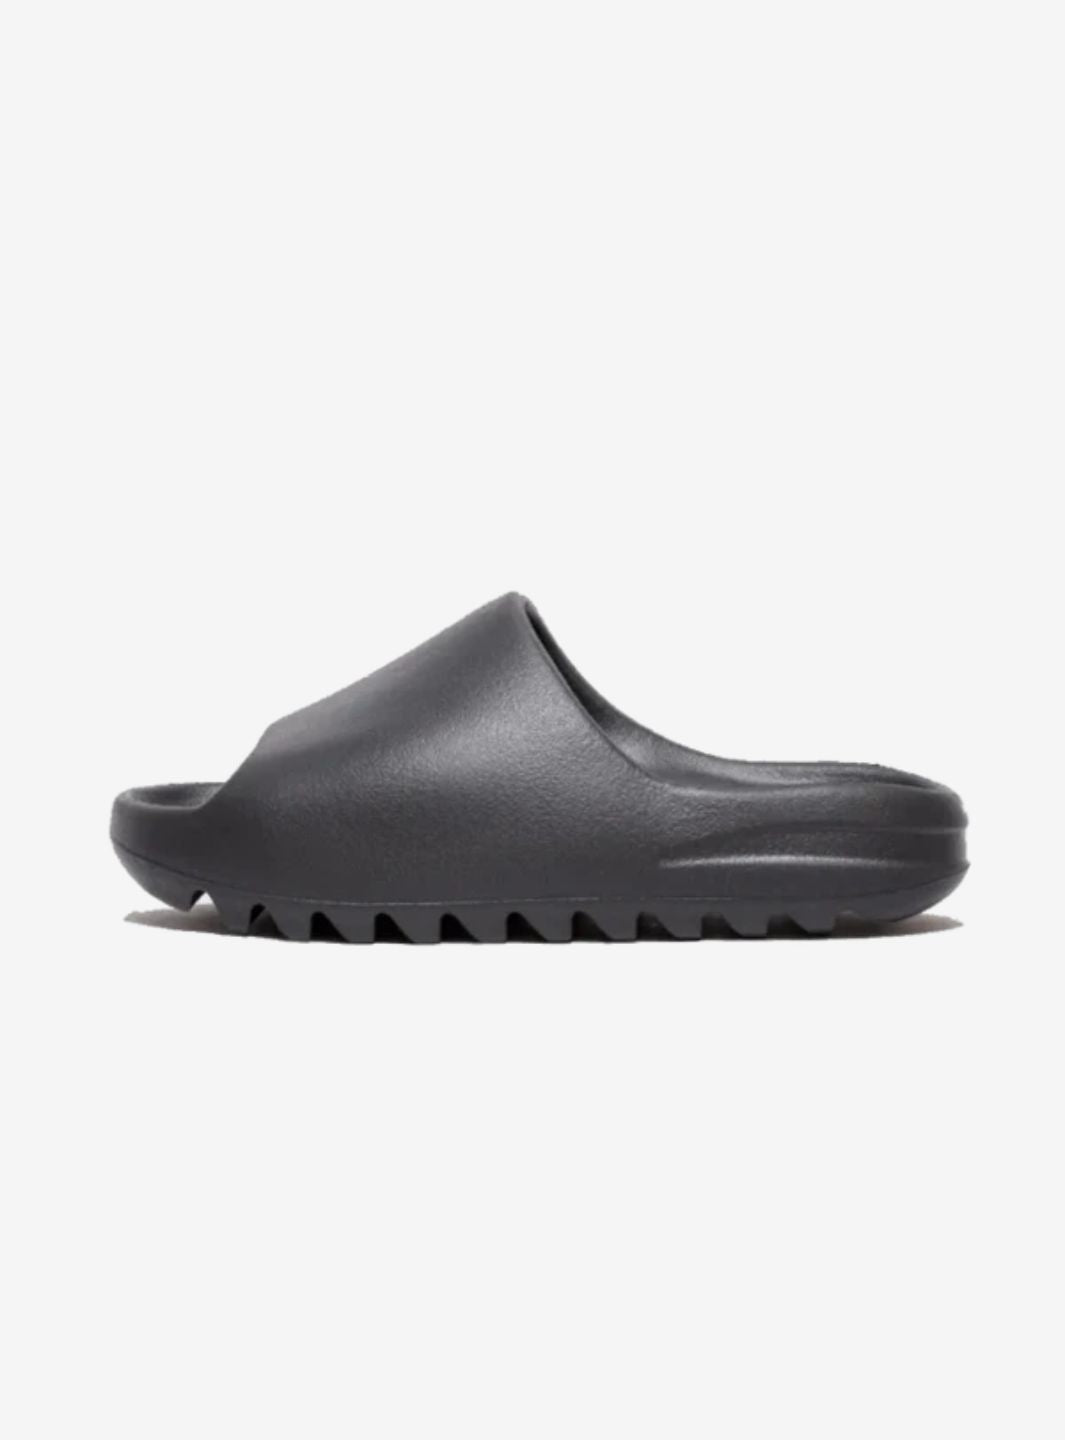 Adidas Yeezy Slide Dark Onyx -  ID5103 | ResellZone